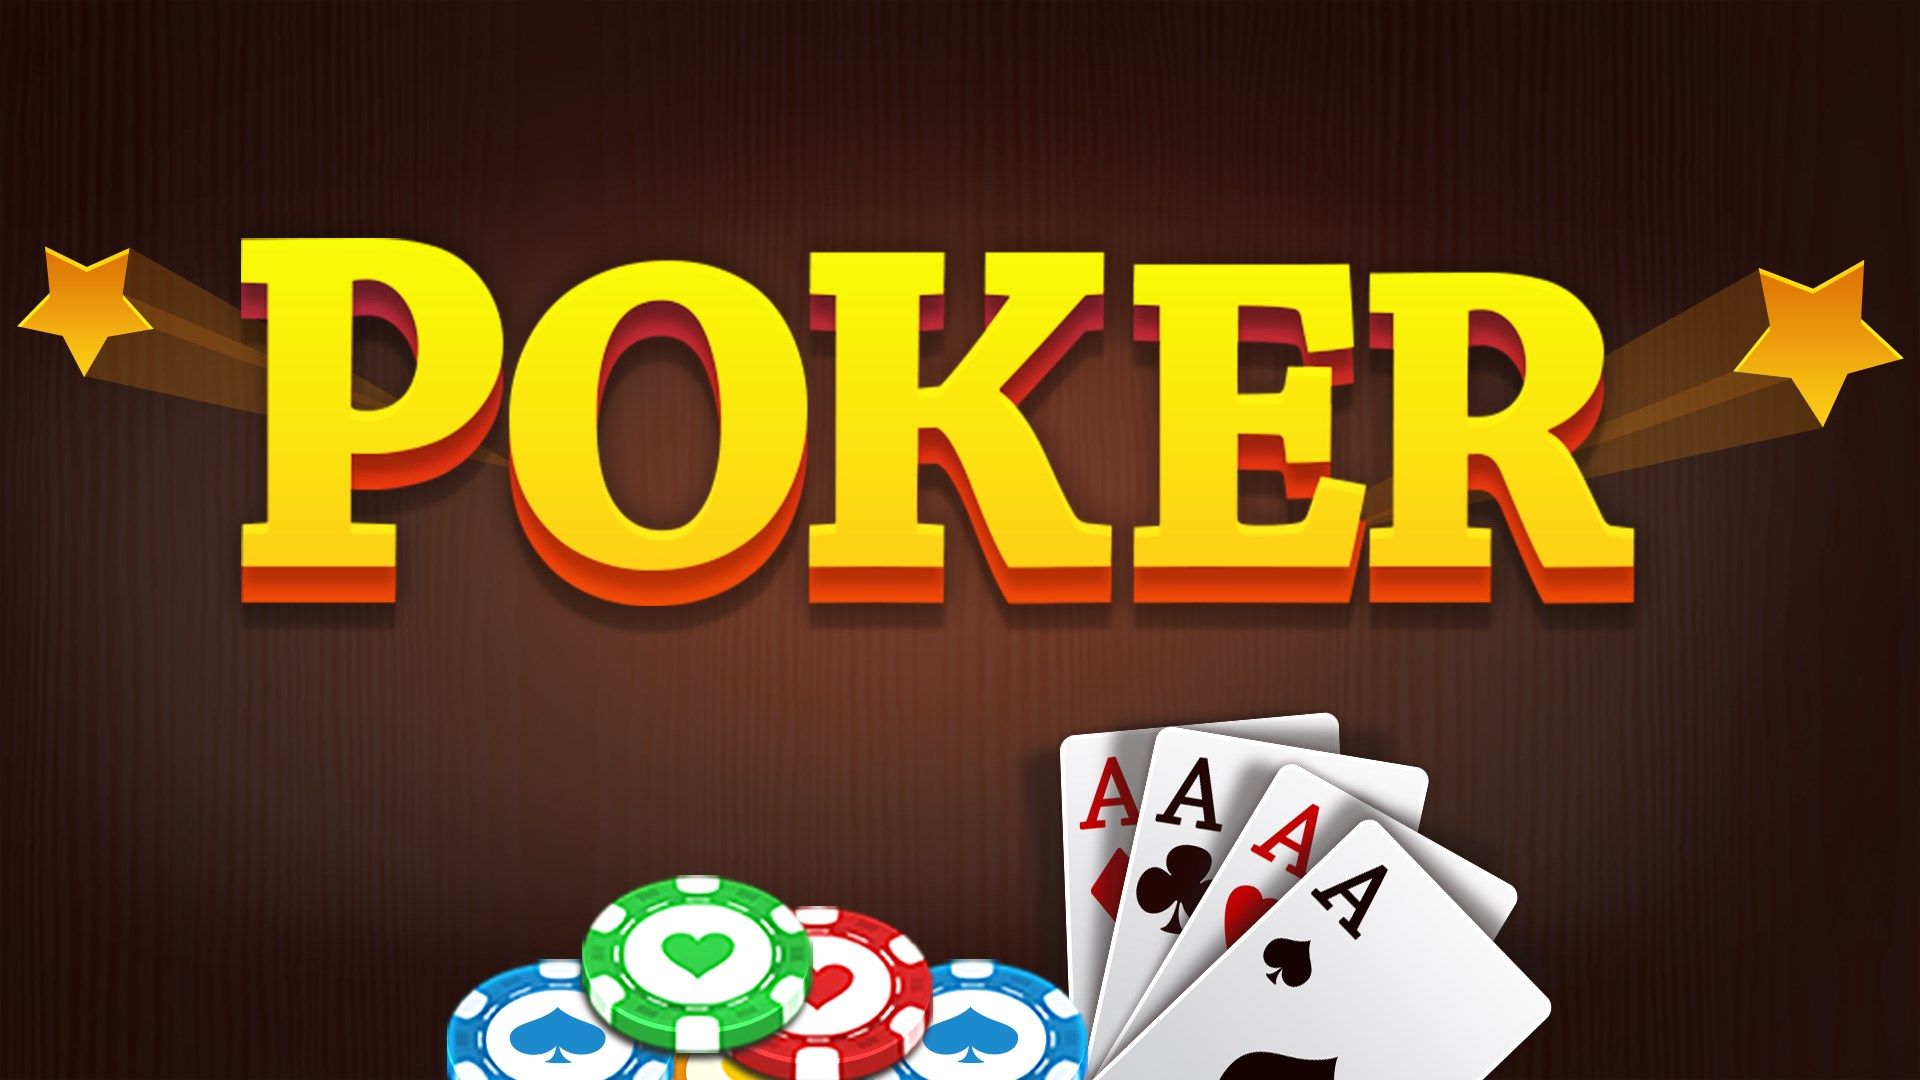 Poker Tables provider